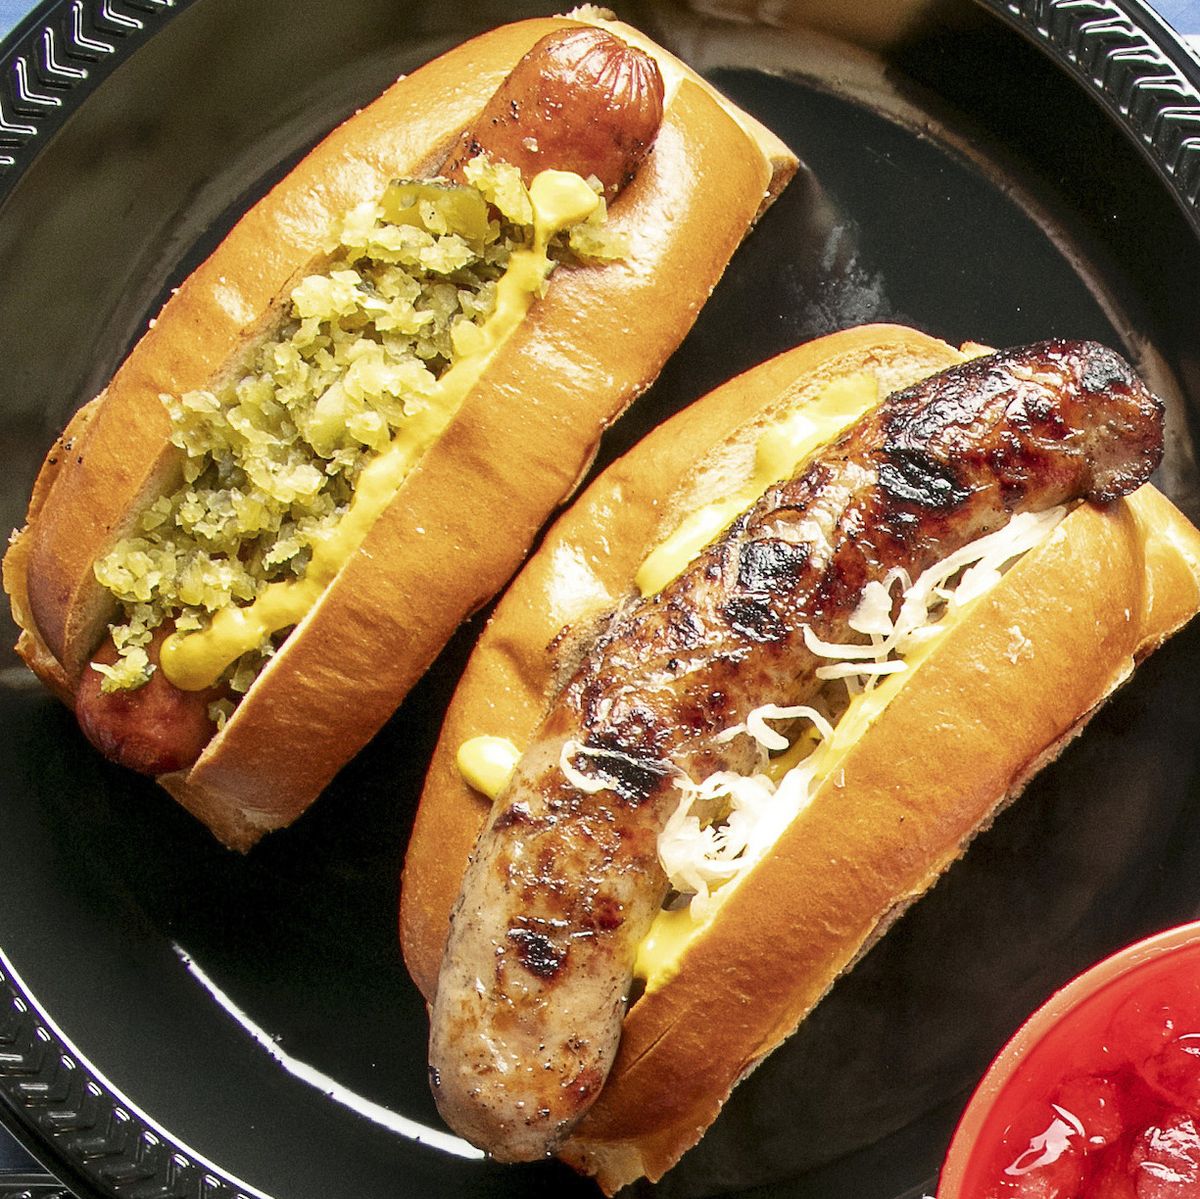 hot dogs and bratwurst with sauerkraut and relish